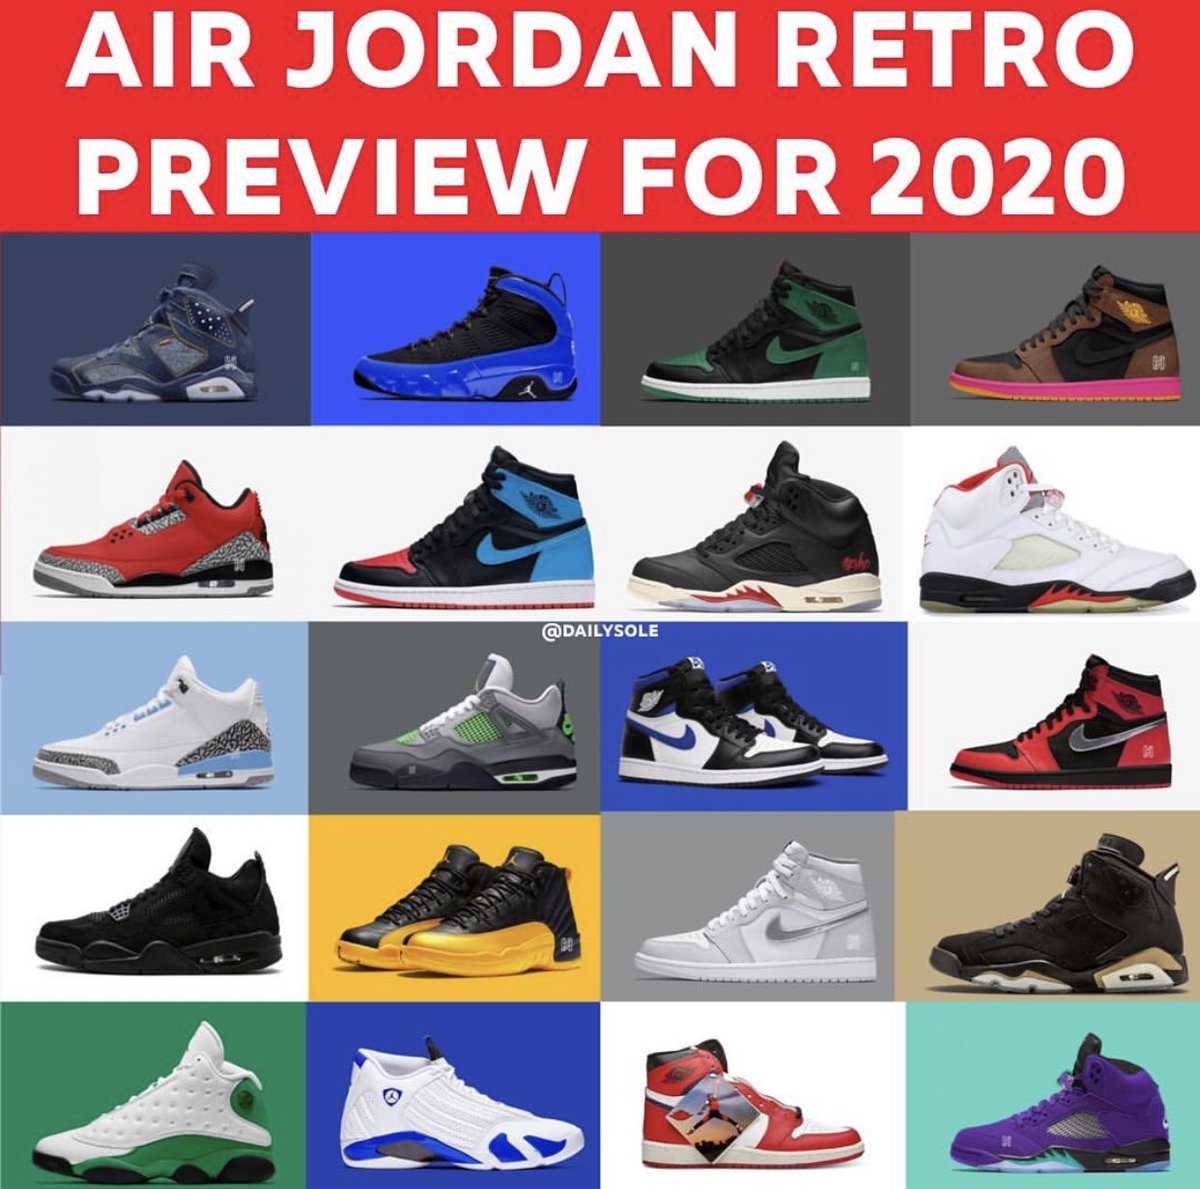 jordans coming out 2020